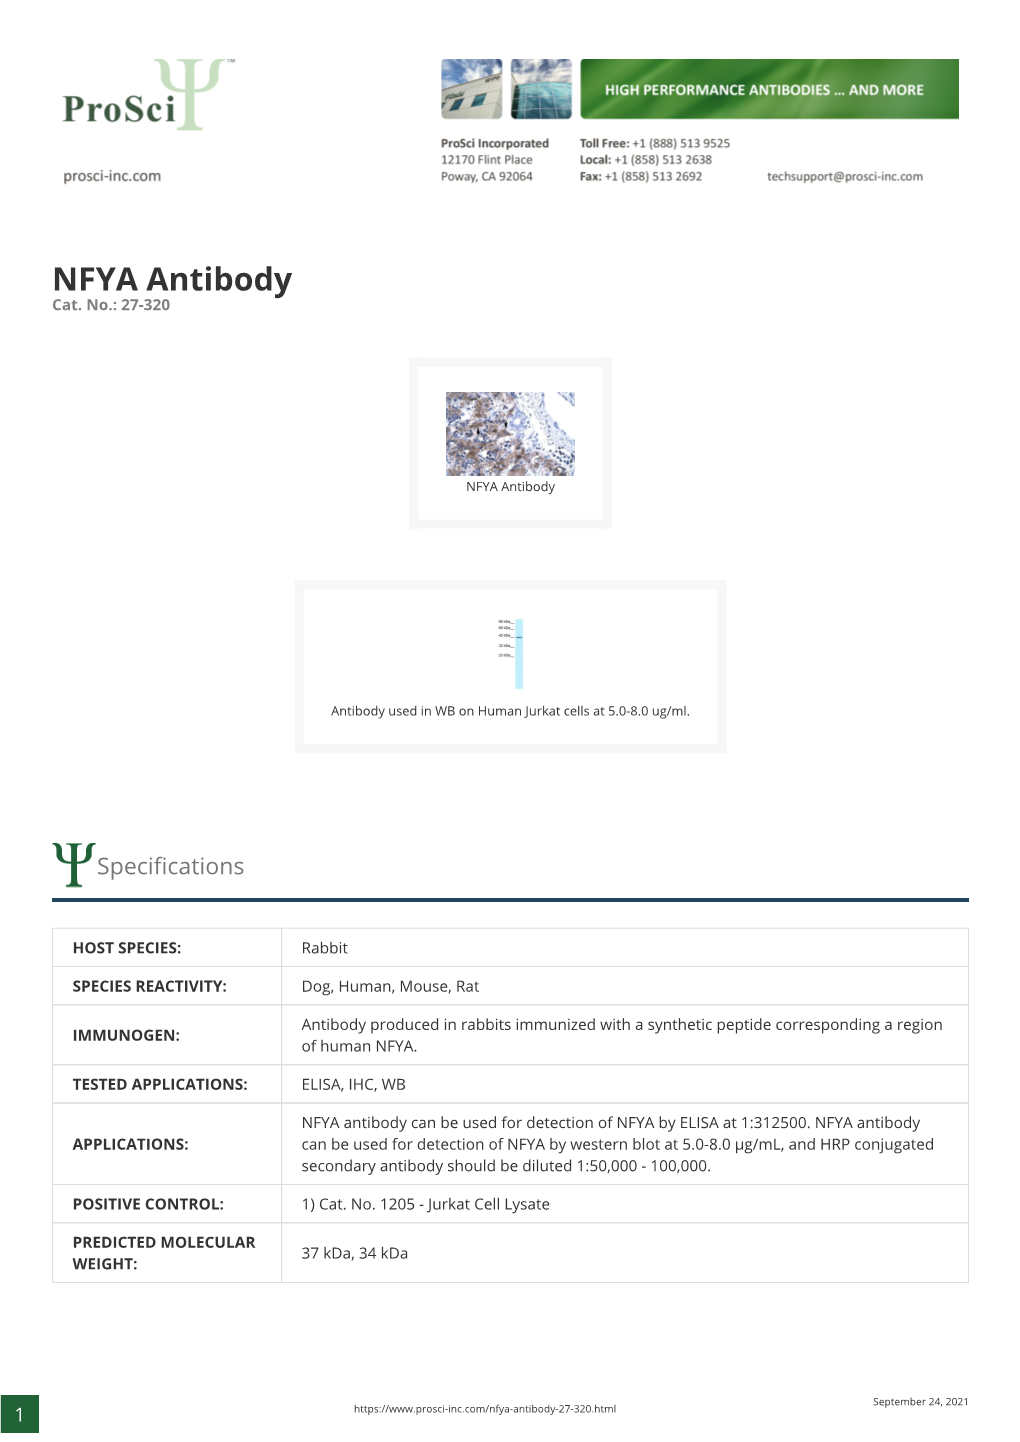 NFYA Antibody Cat